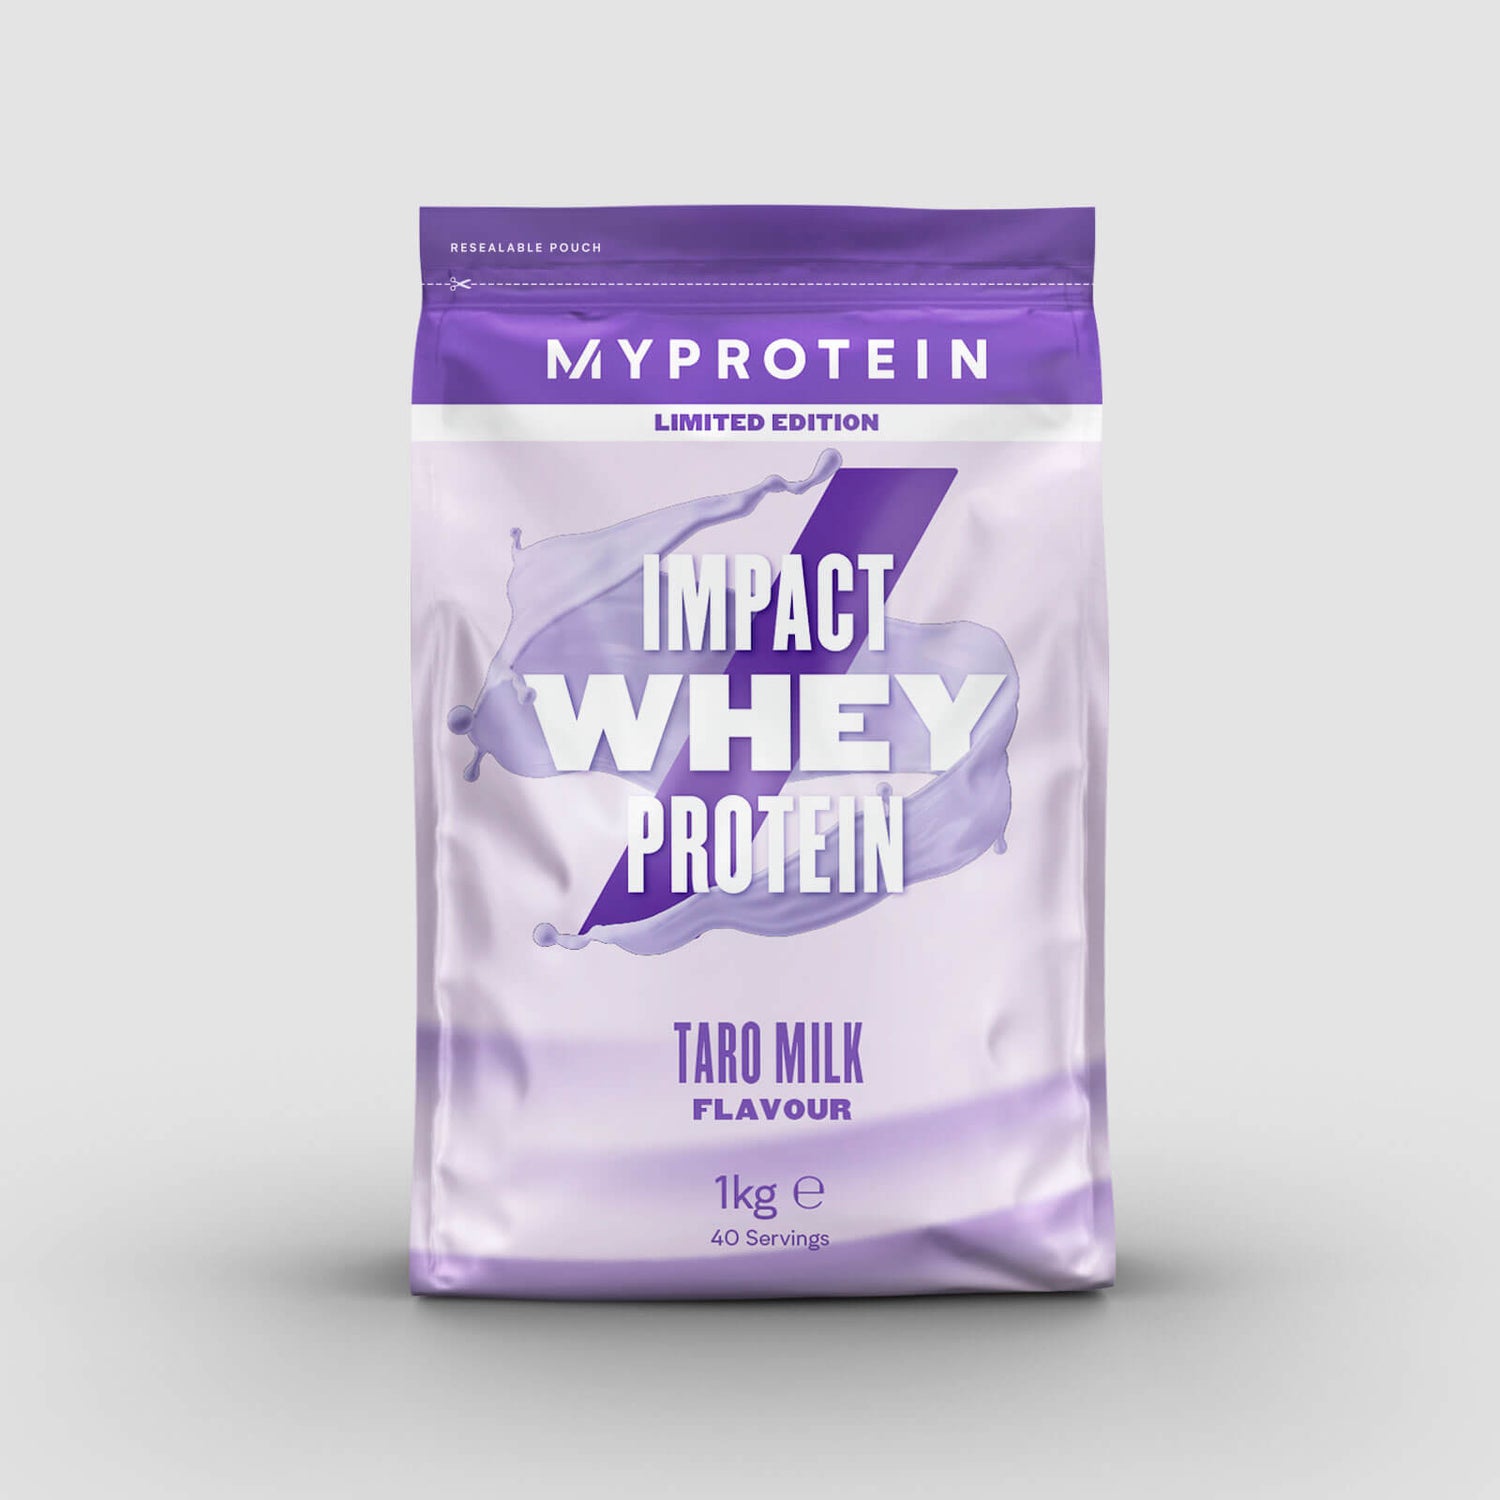 Myprotein Impact Whey Protein, Taro Milk (ALT) - 250g - Taro Milk